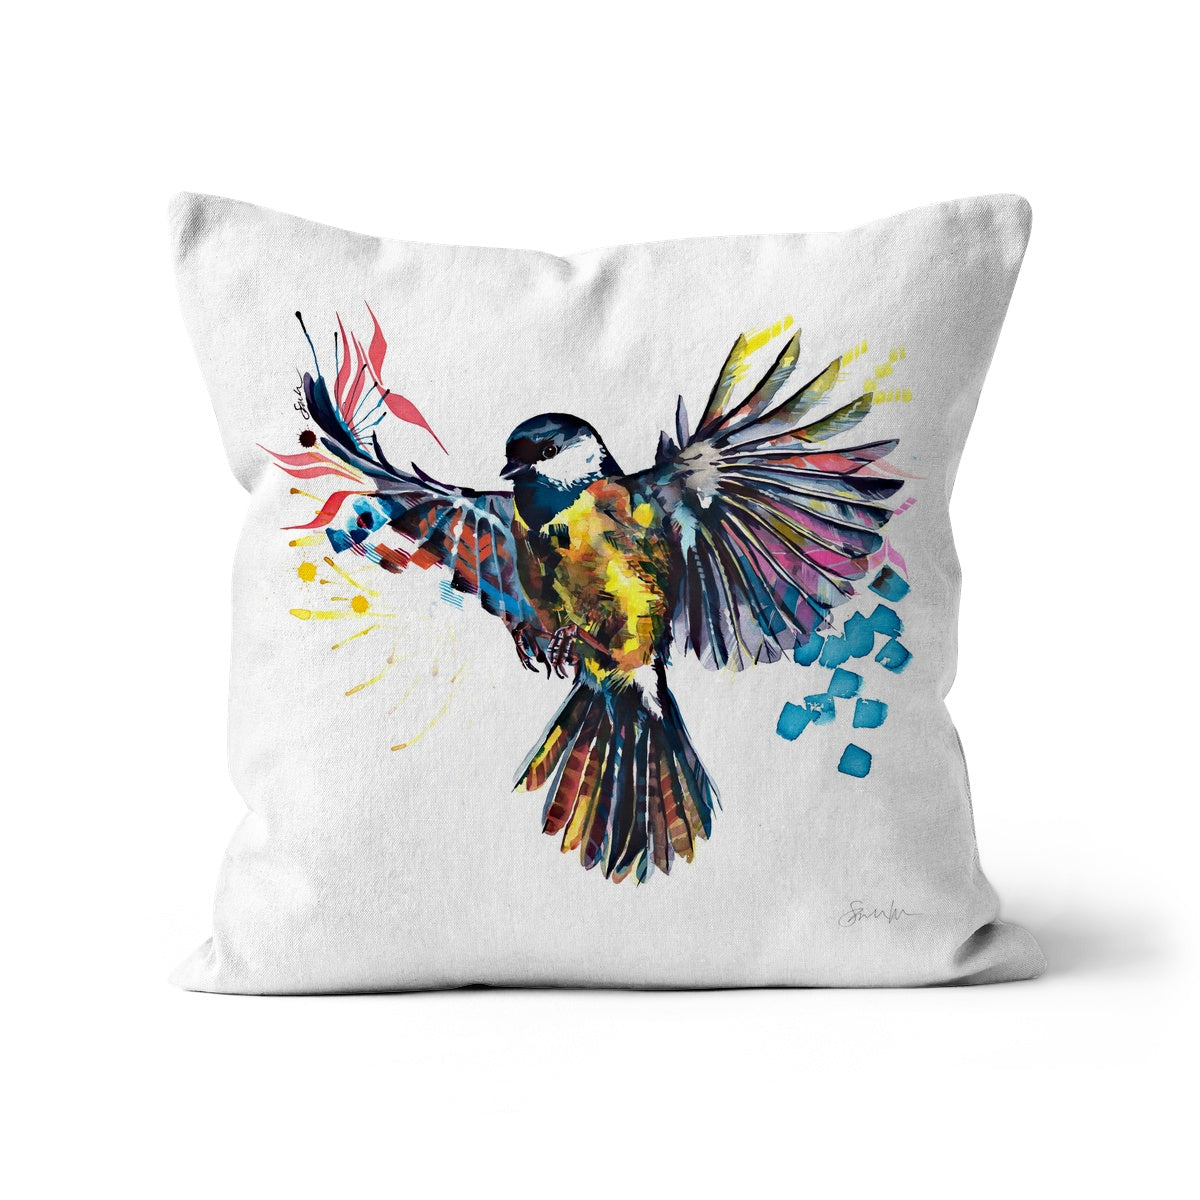 Grace the Flying Bird Cushion